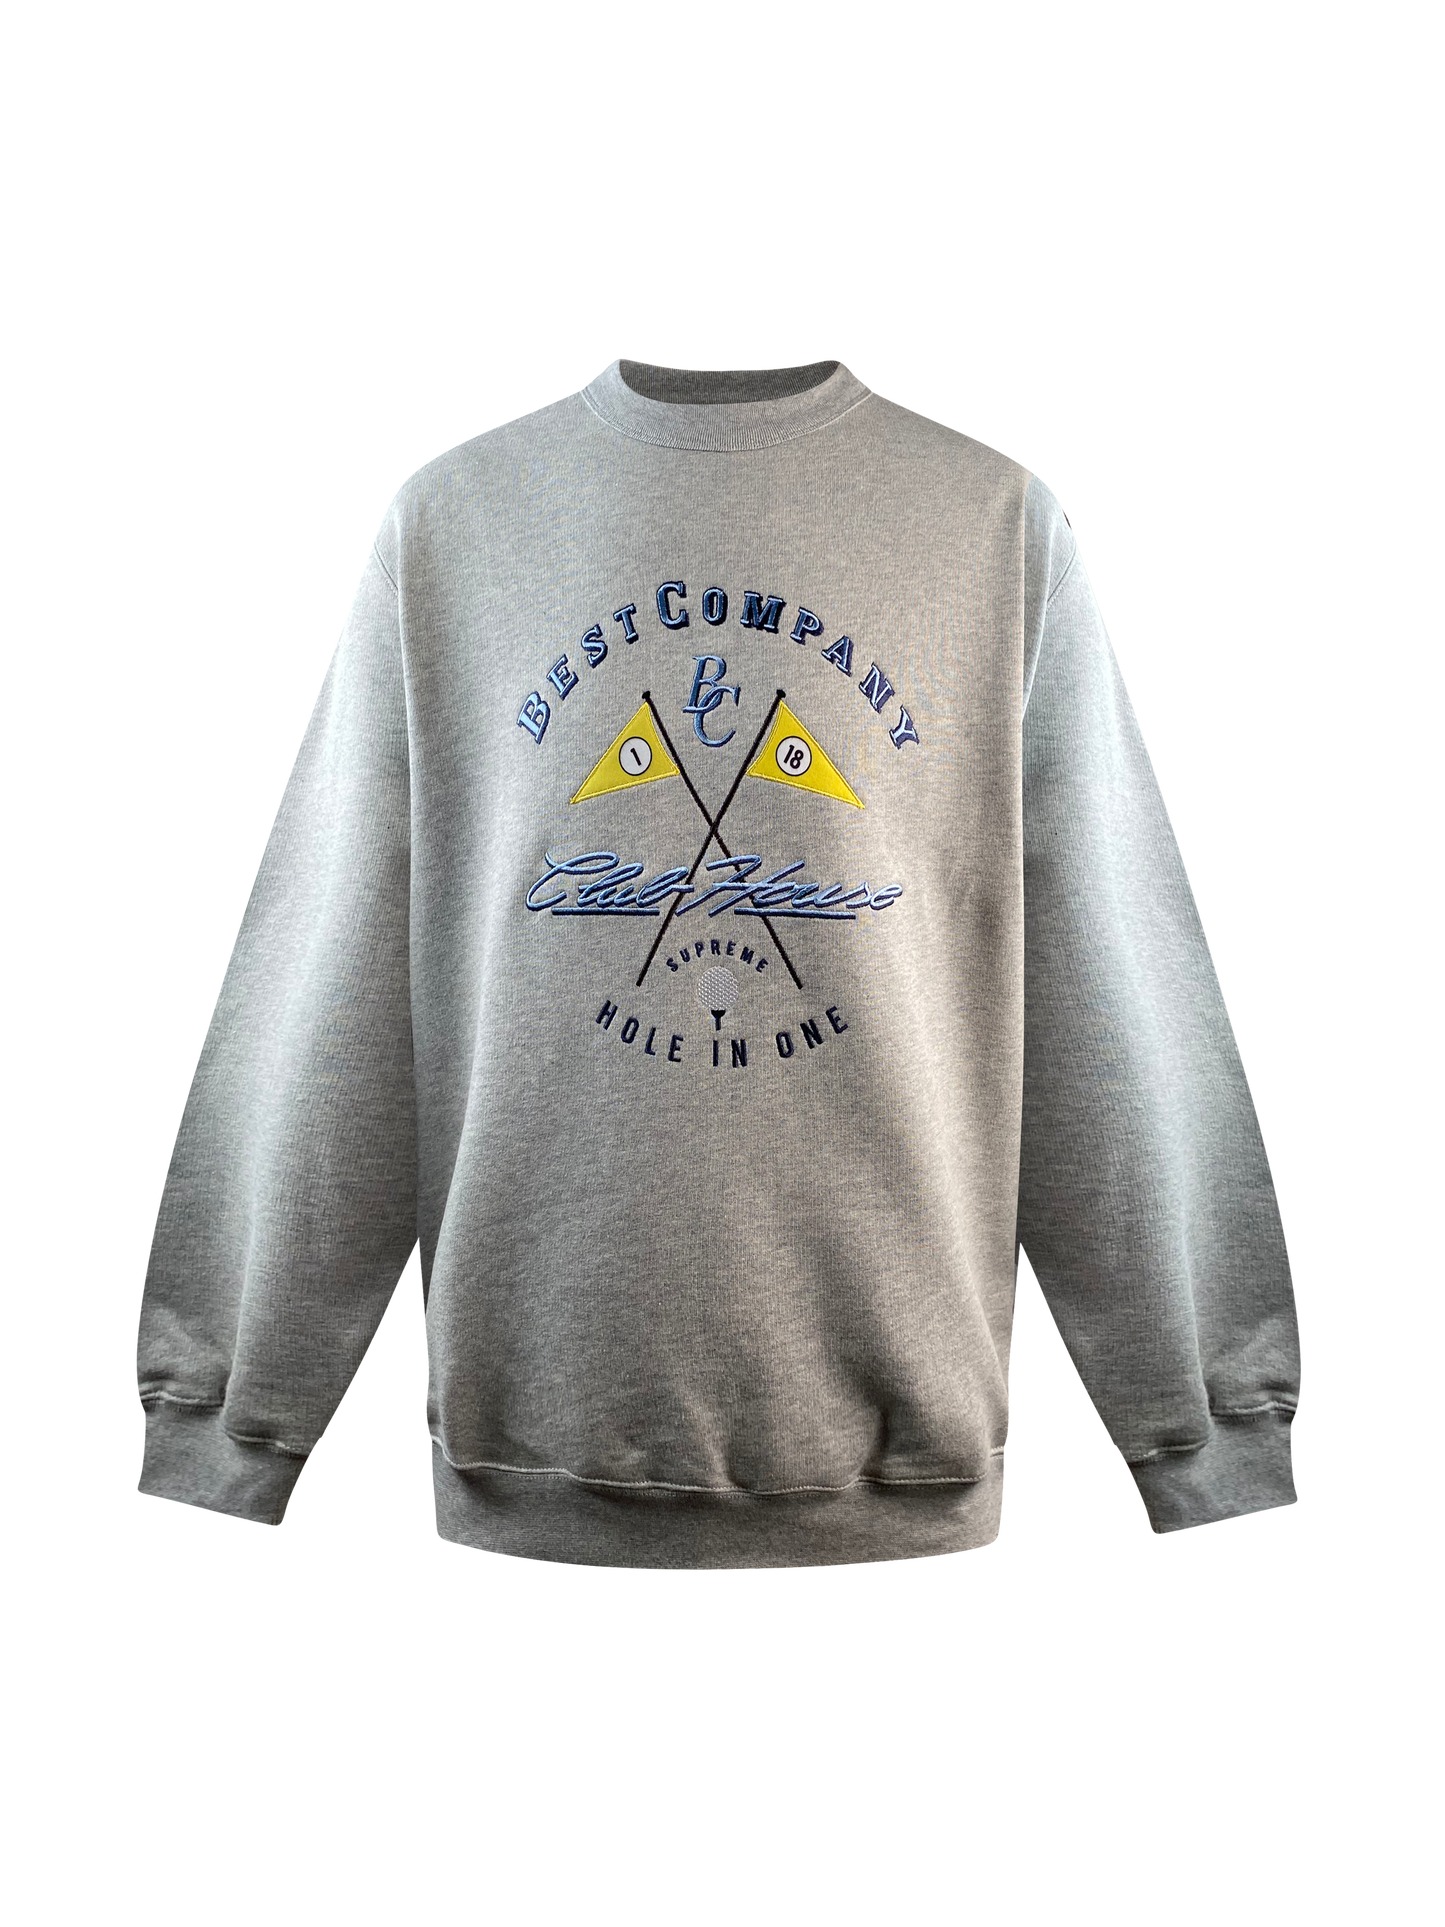 Best Company Sweatshirt "Sweat Golf" - Mixed Grey